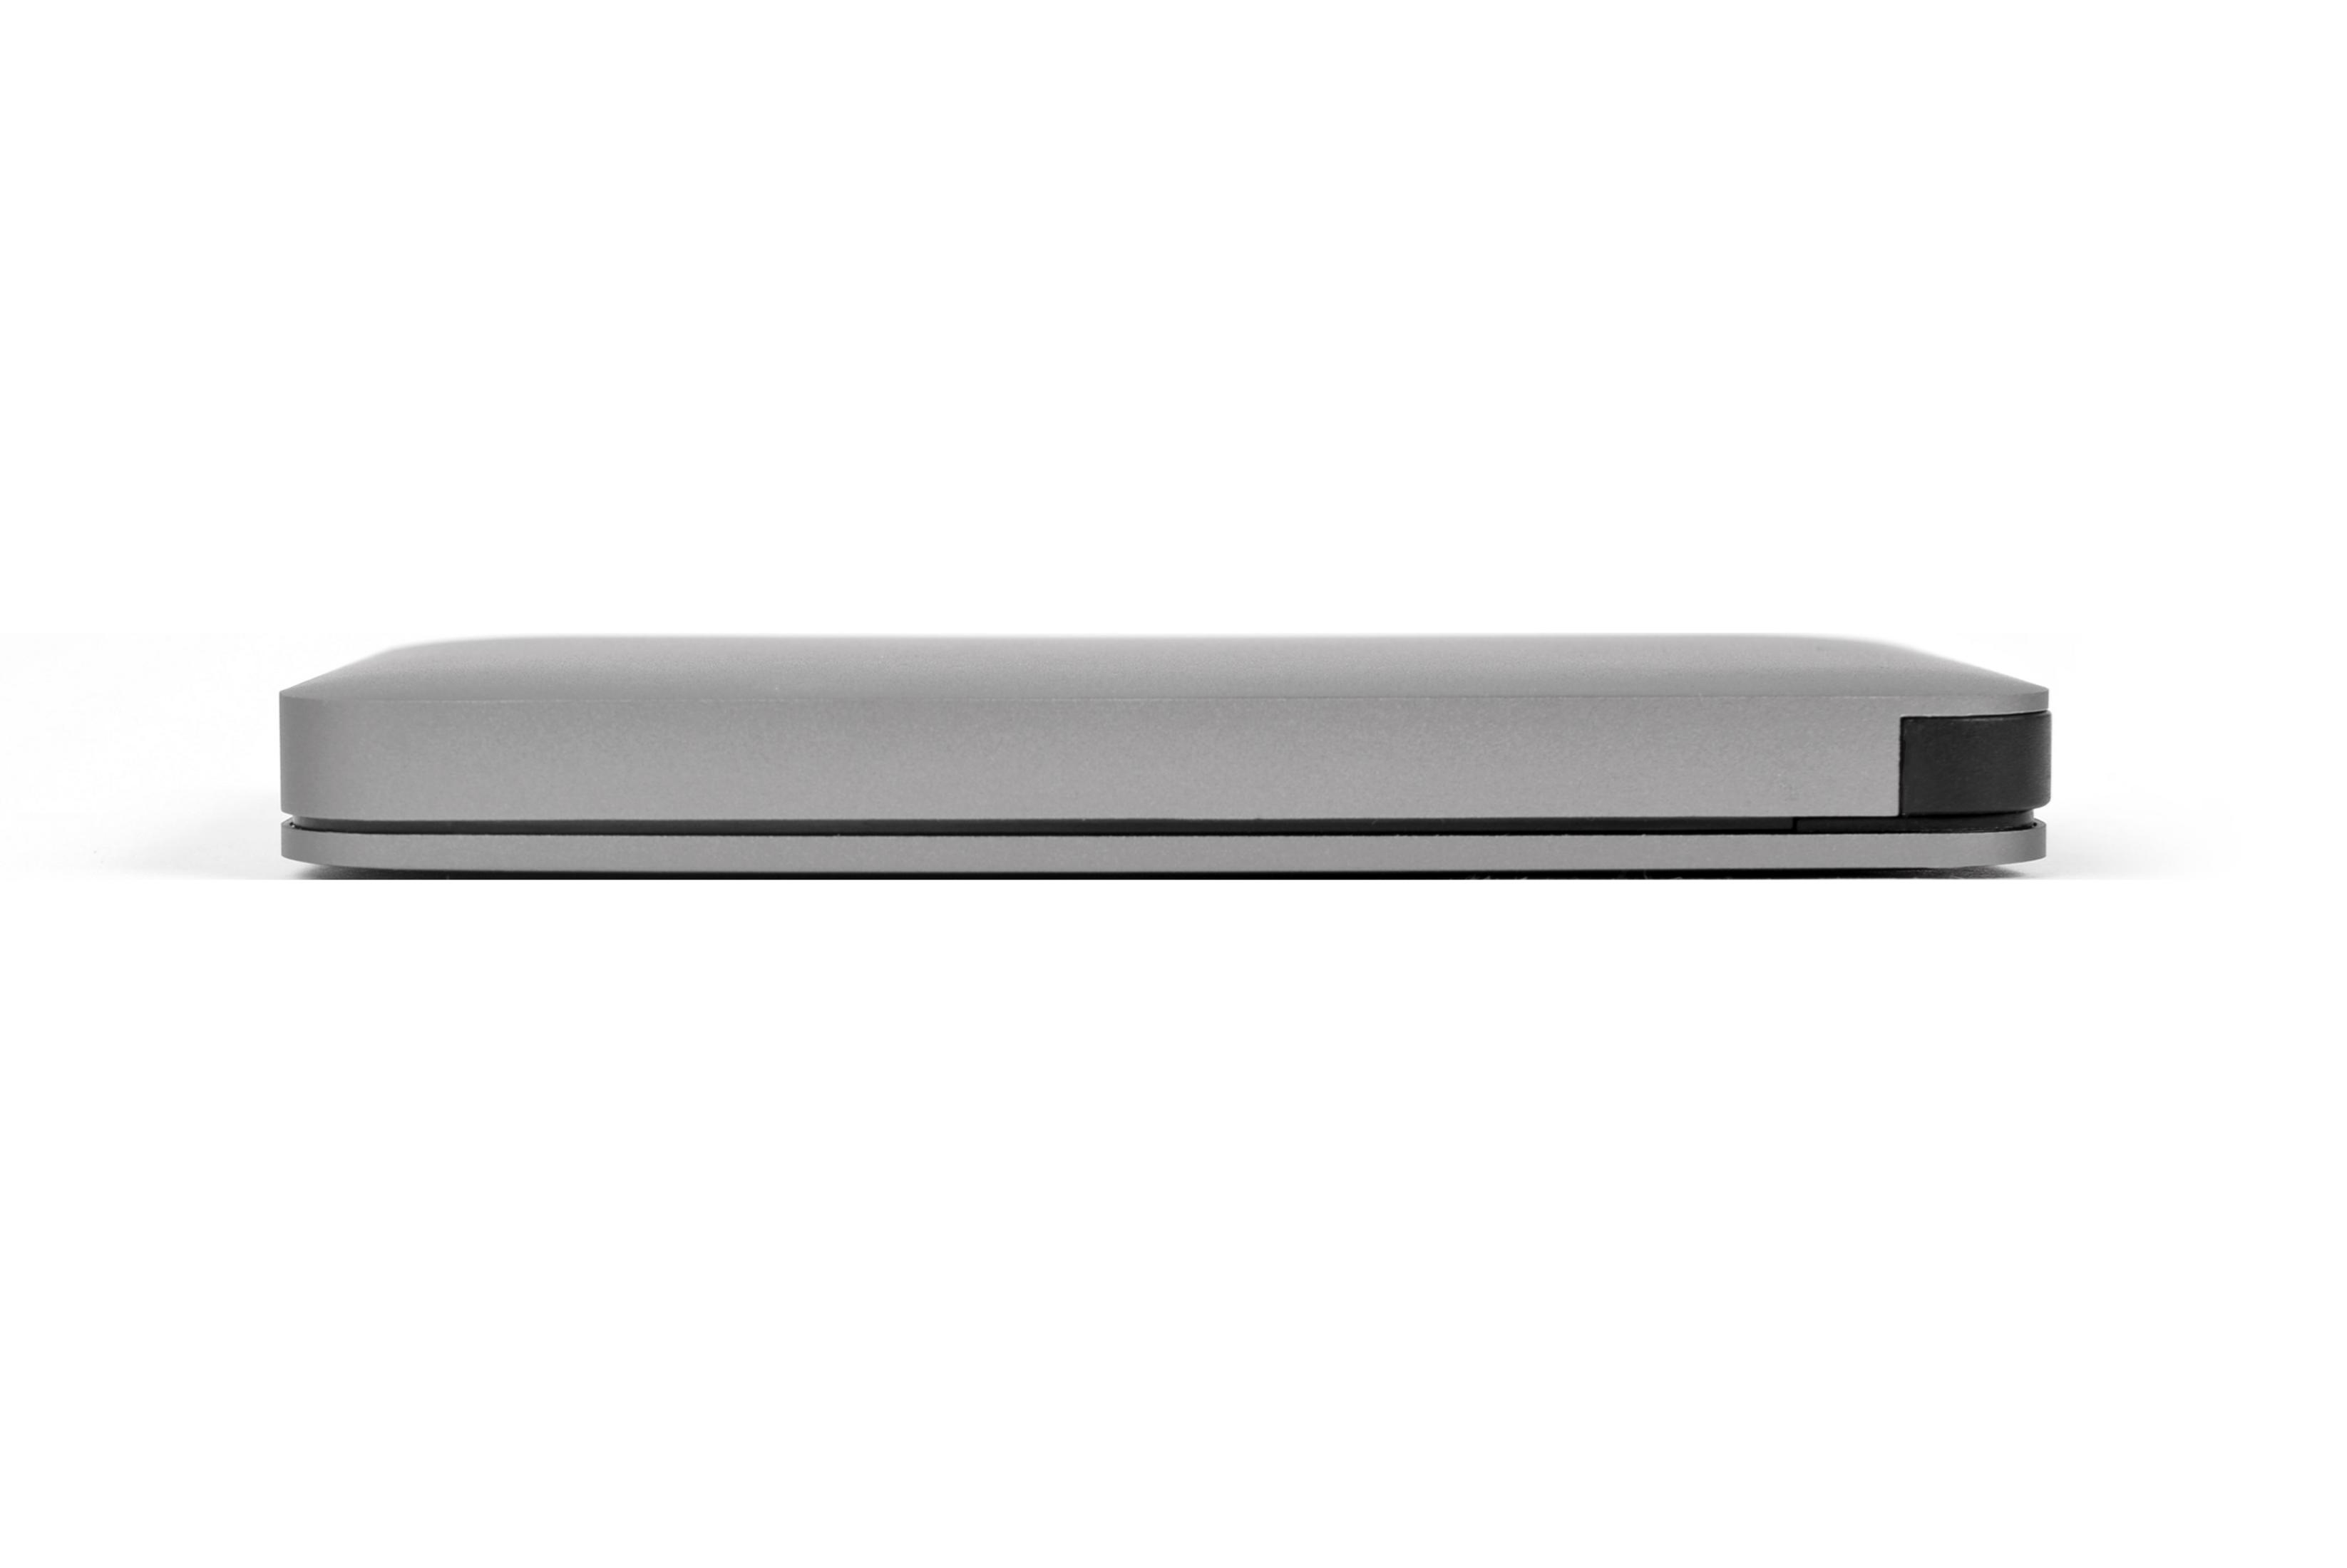 2.5 CASE HD SATA SITECOM USB-A, Festplattengehäuse MD-400